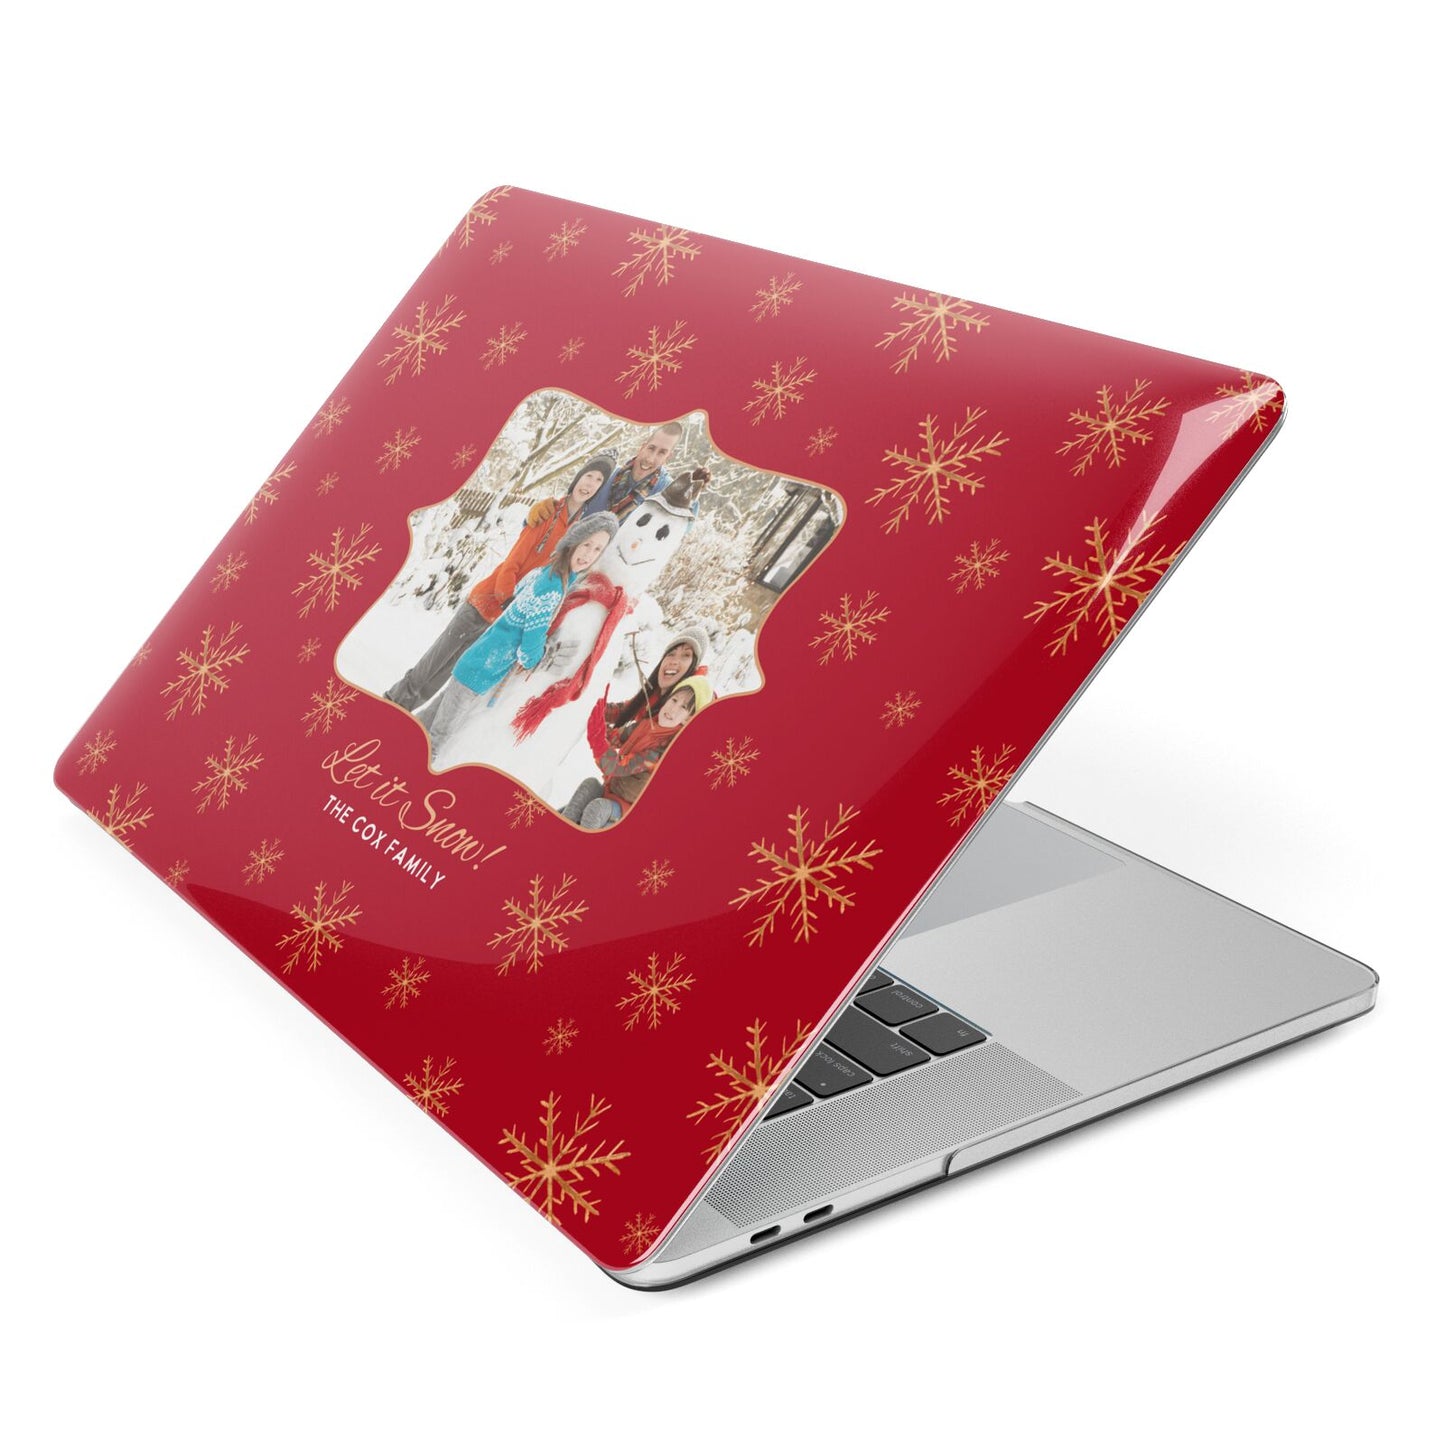 Let it Snow Christmas Photo Upload Apple MacBook Case Side View